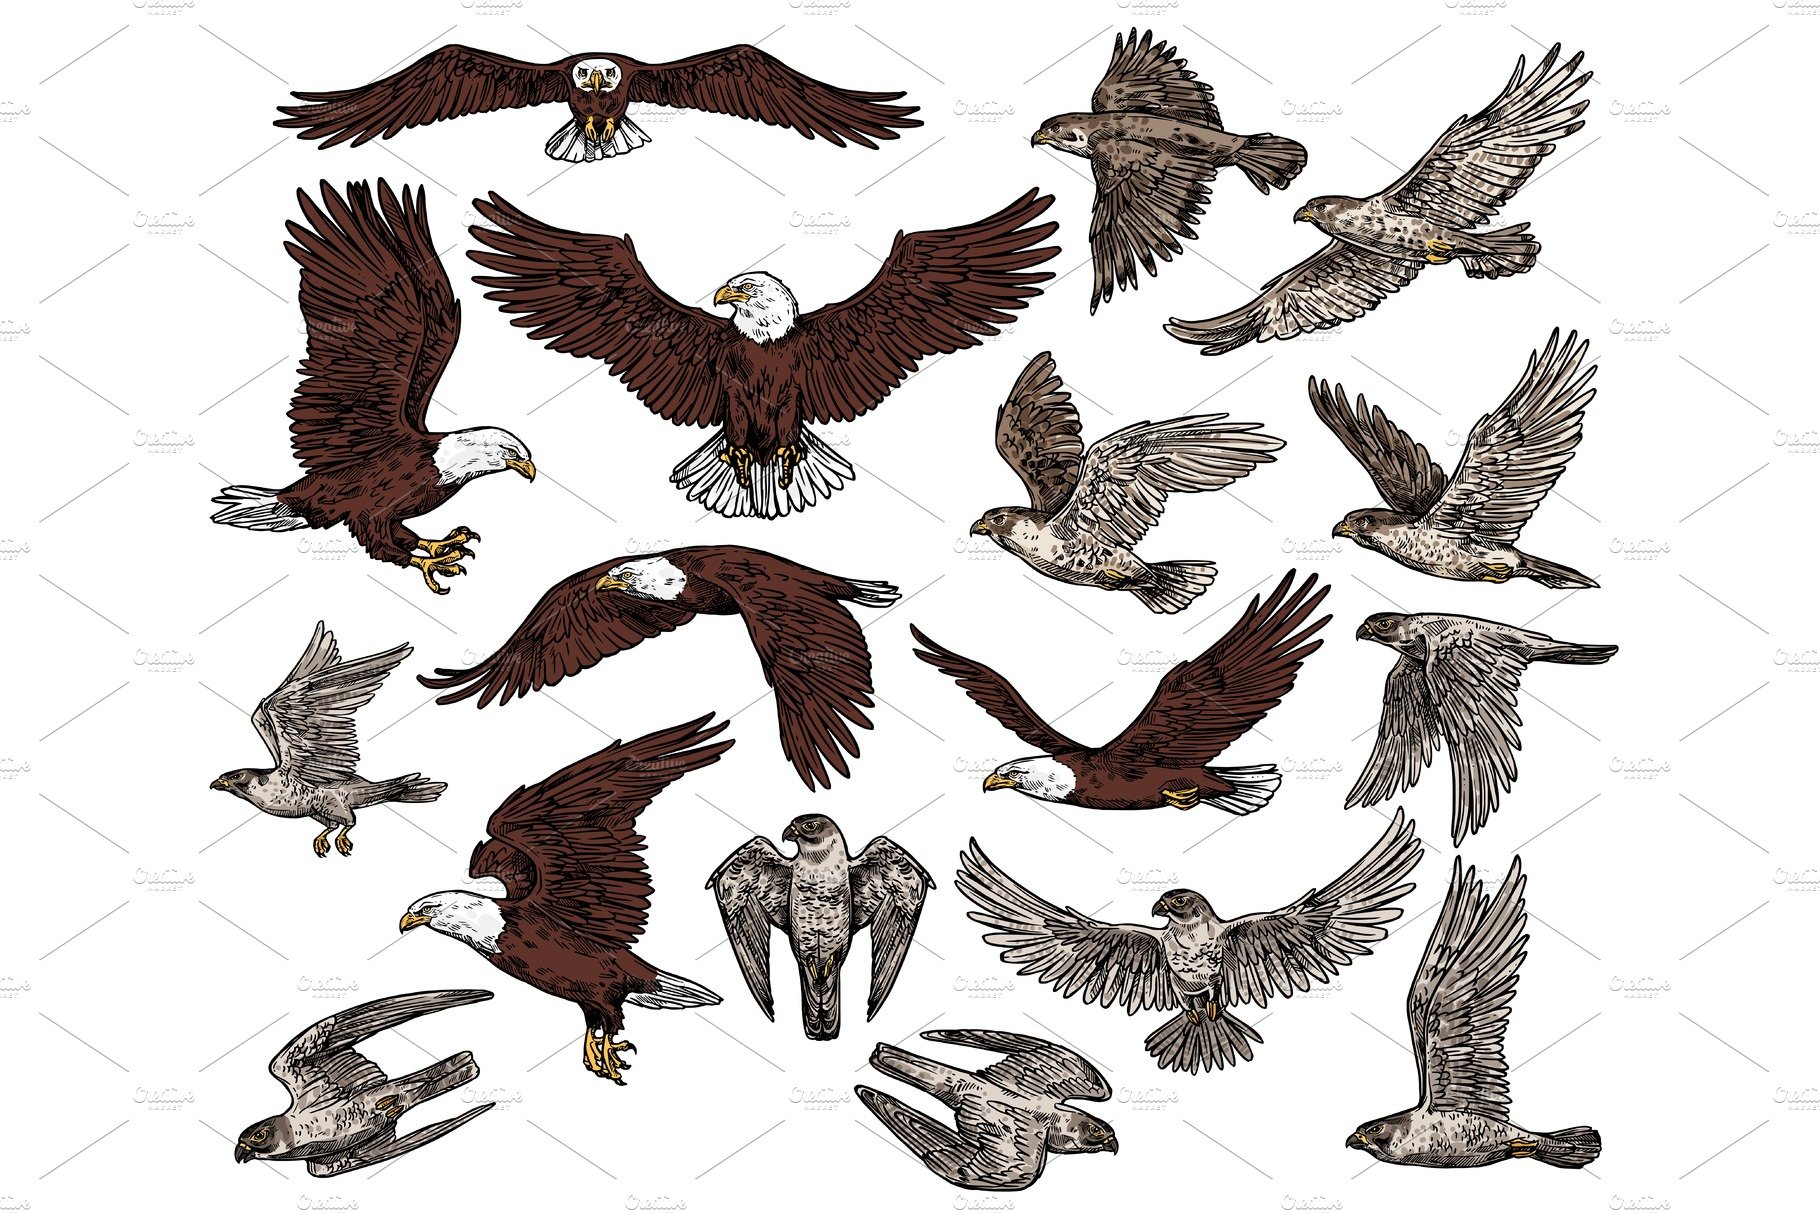 Eagle and hawk, falcons cover image.